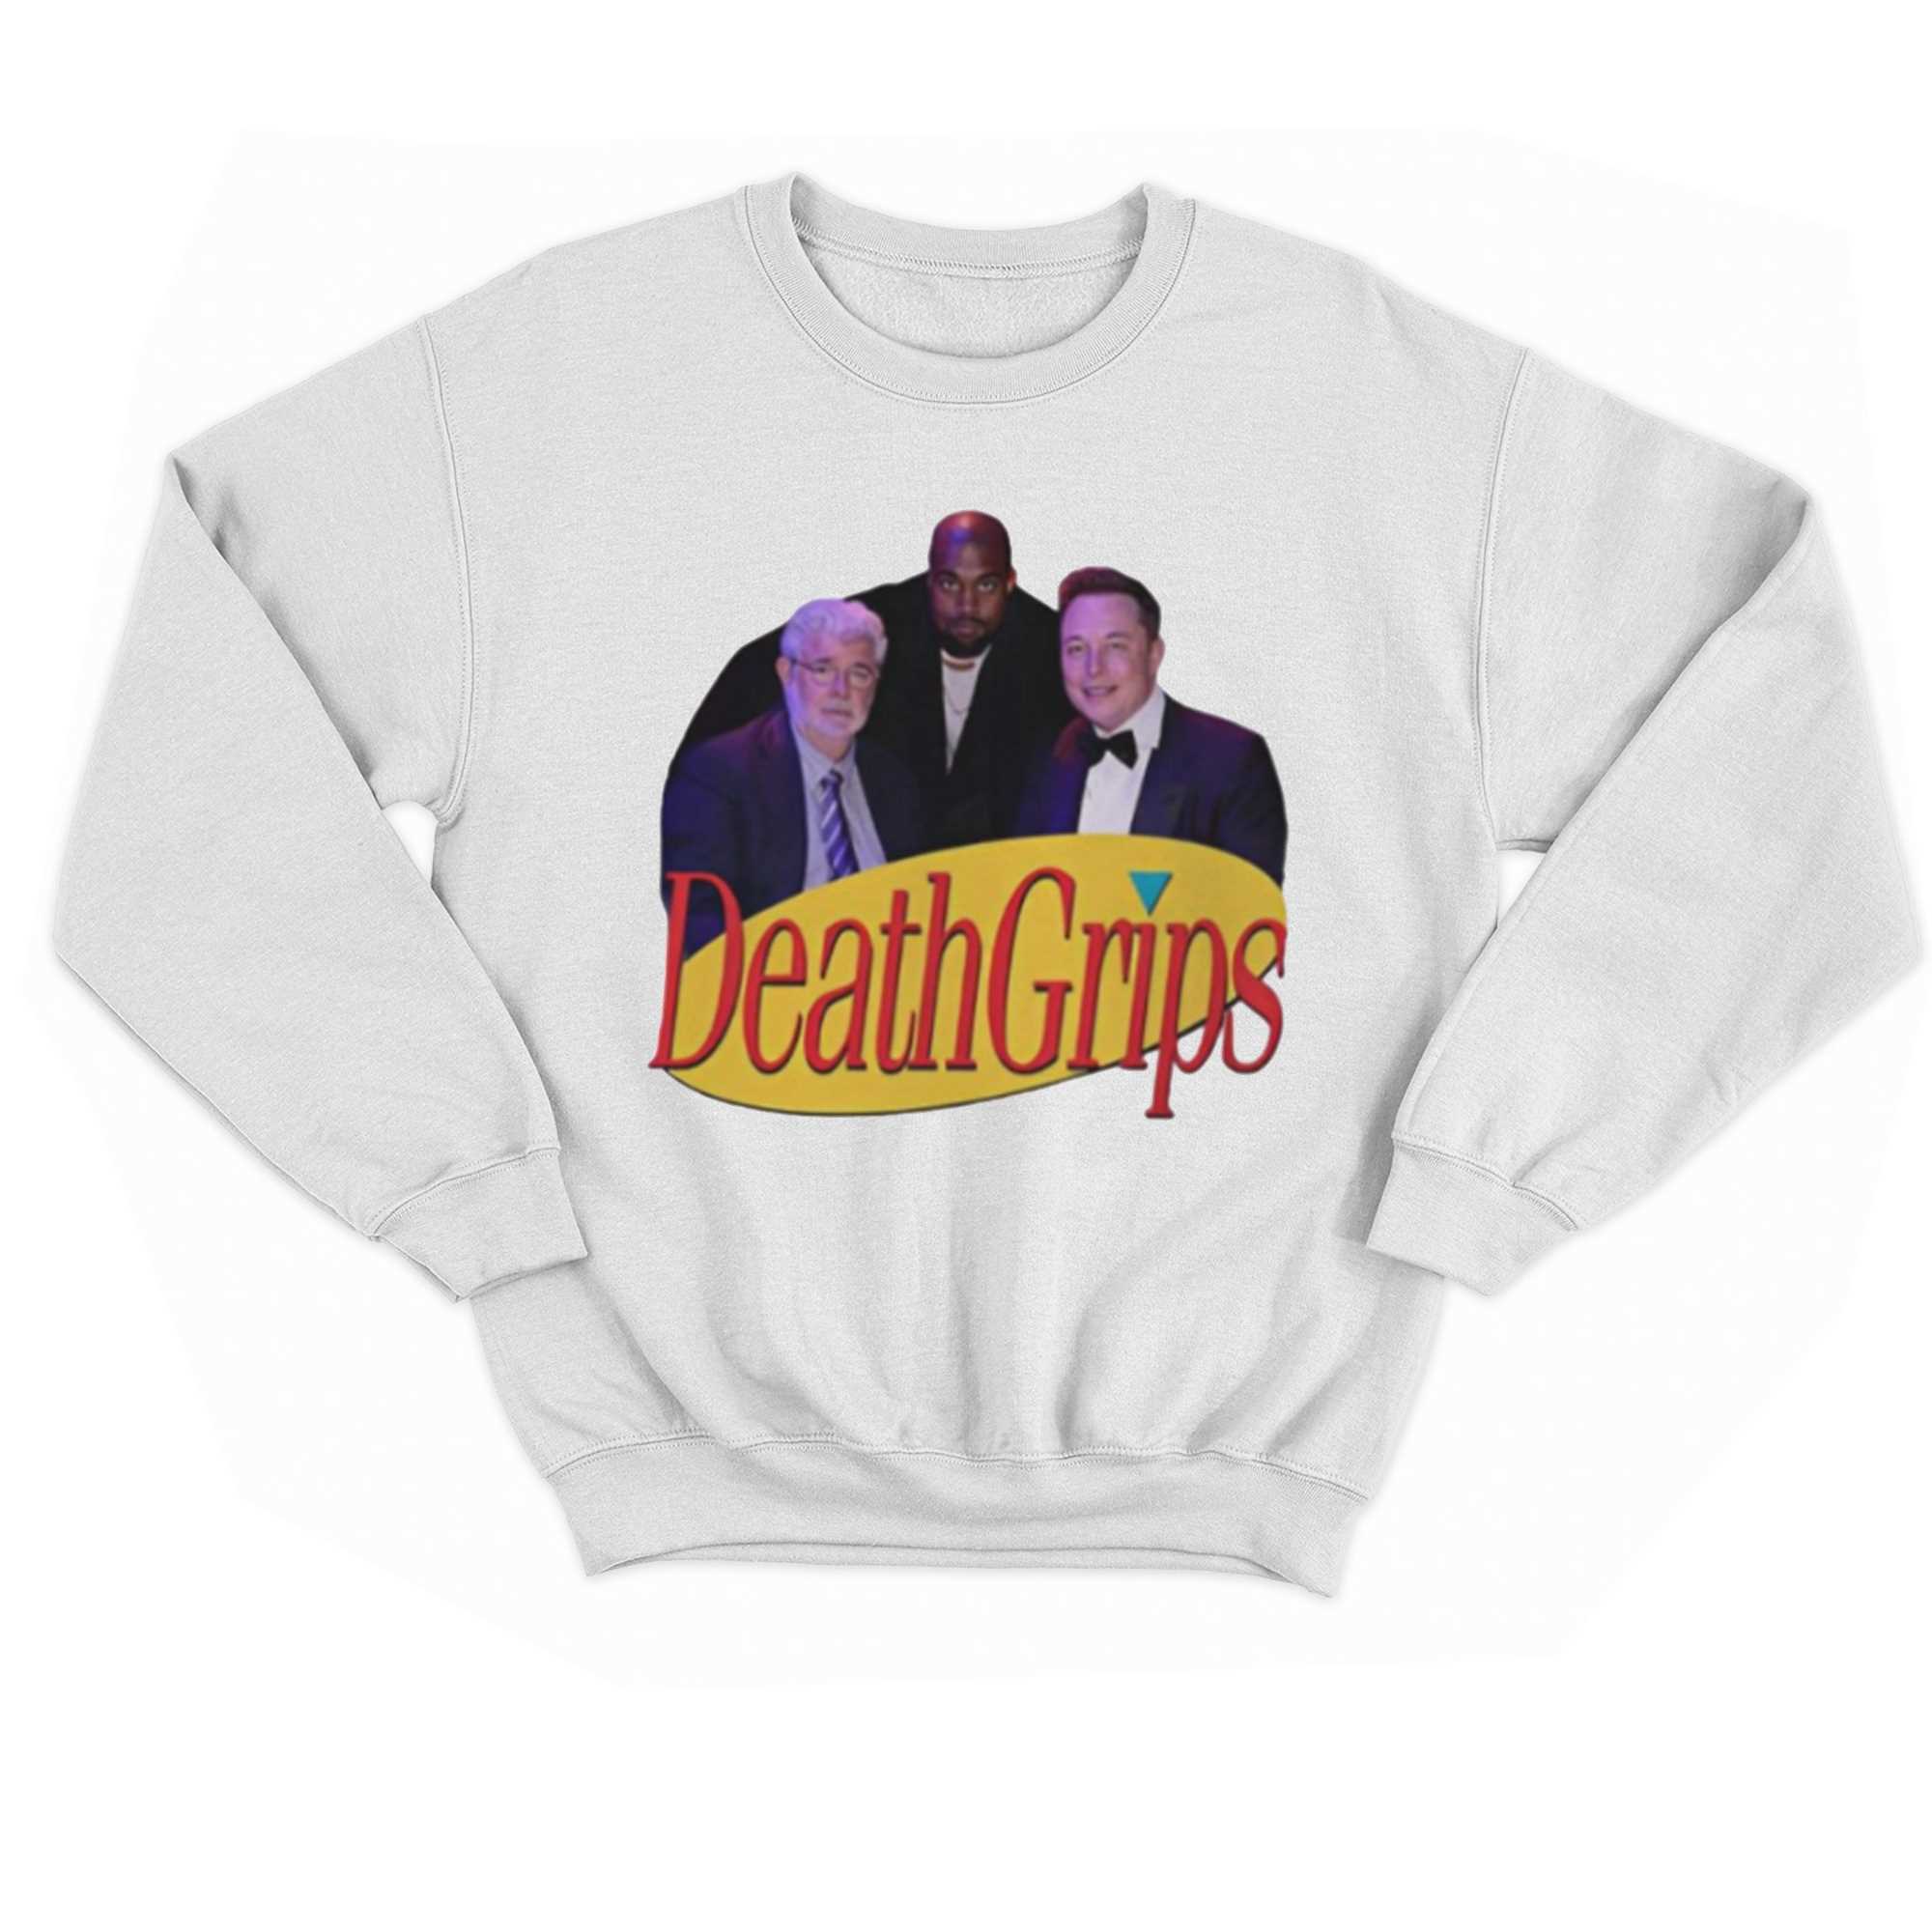 Deathgrips T-shirt 